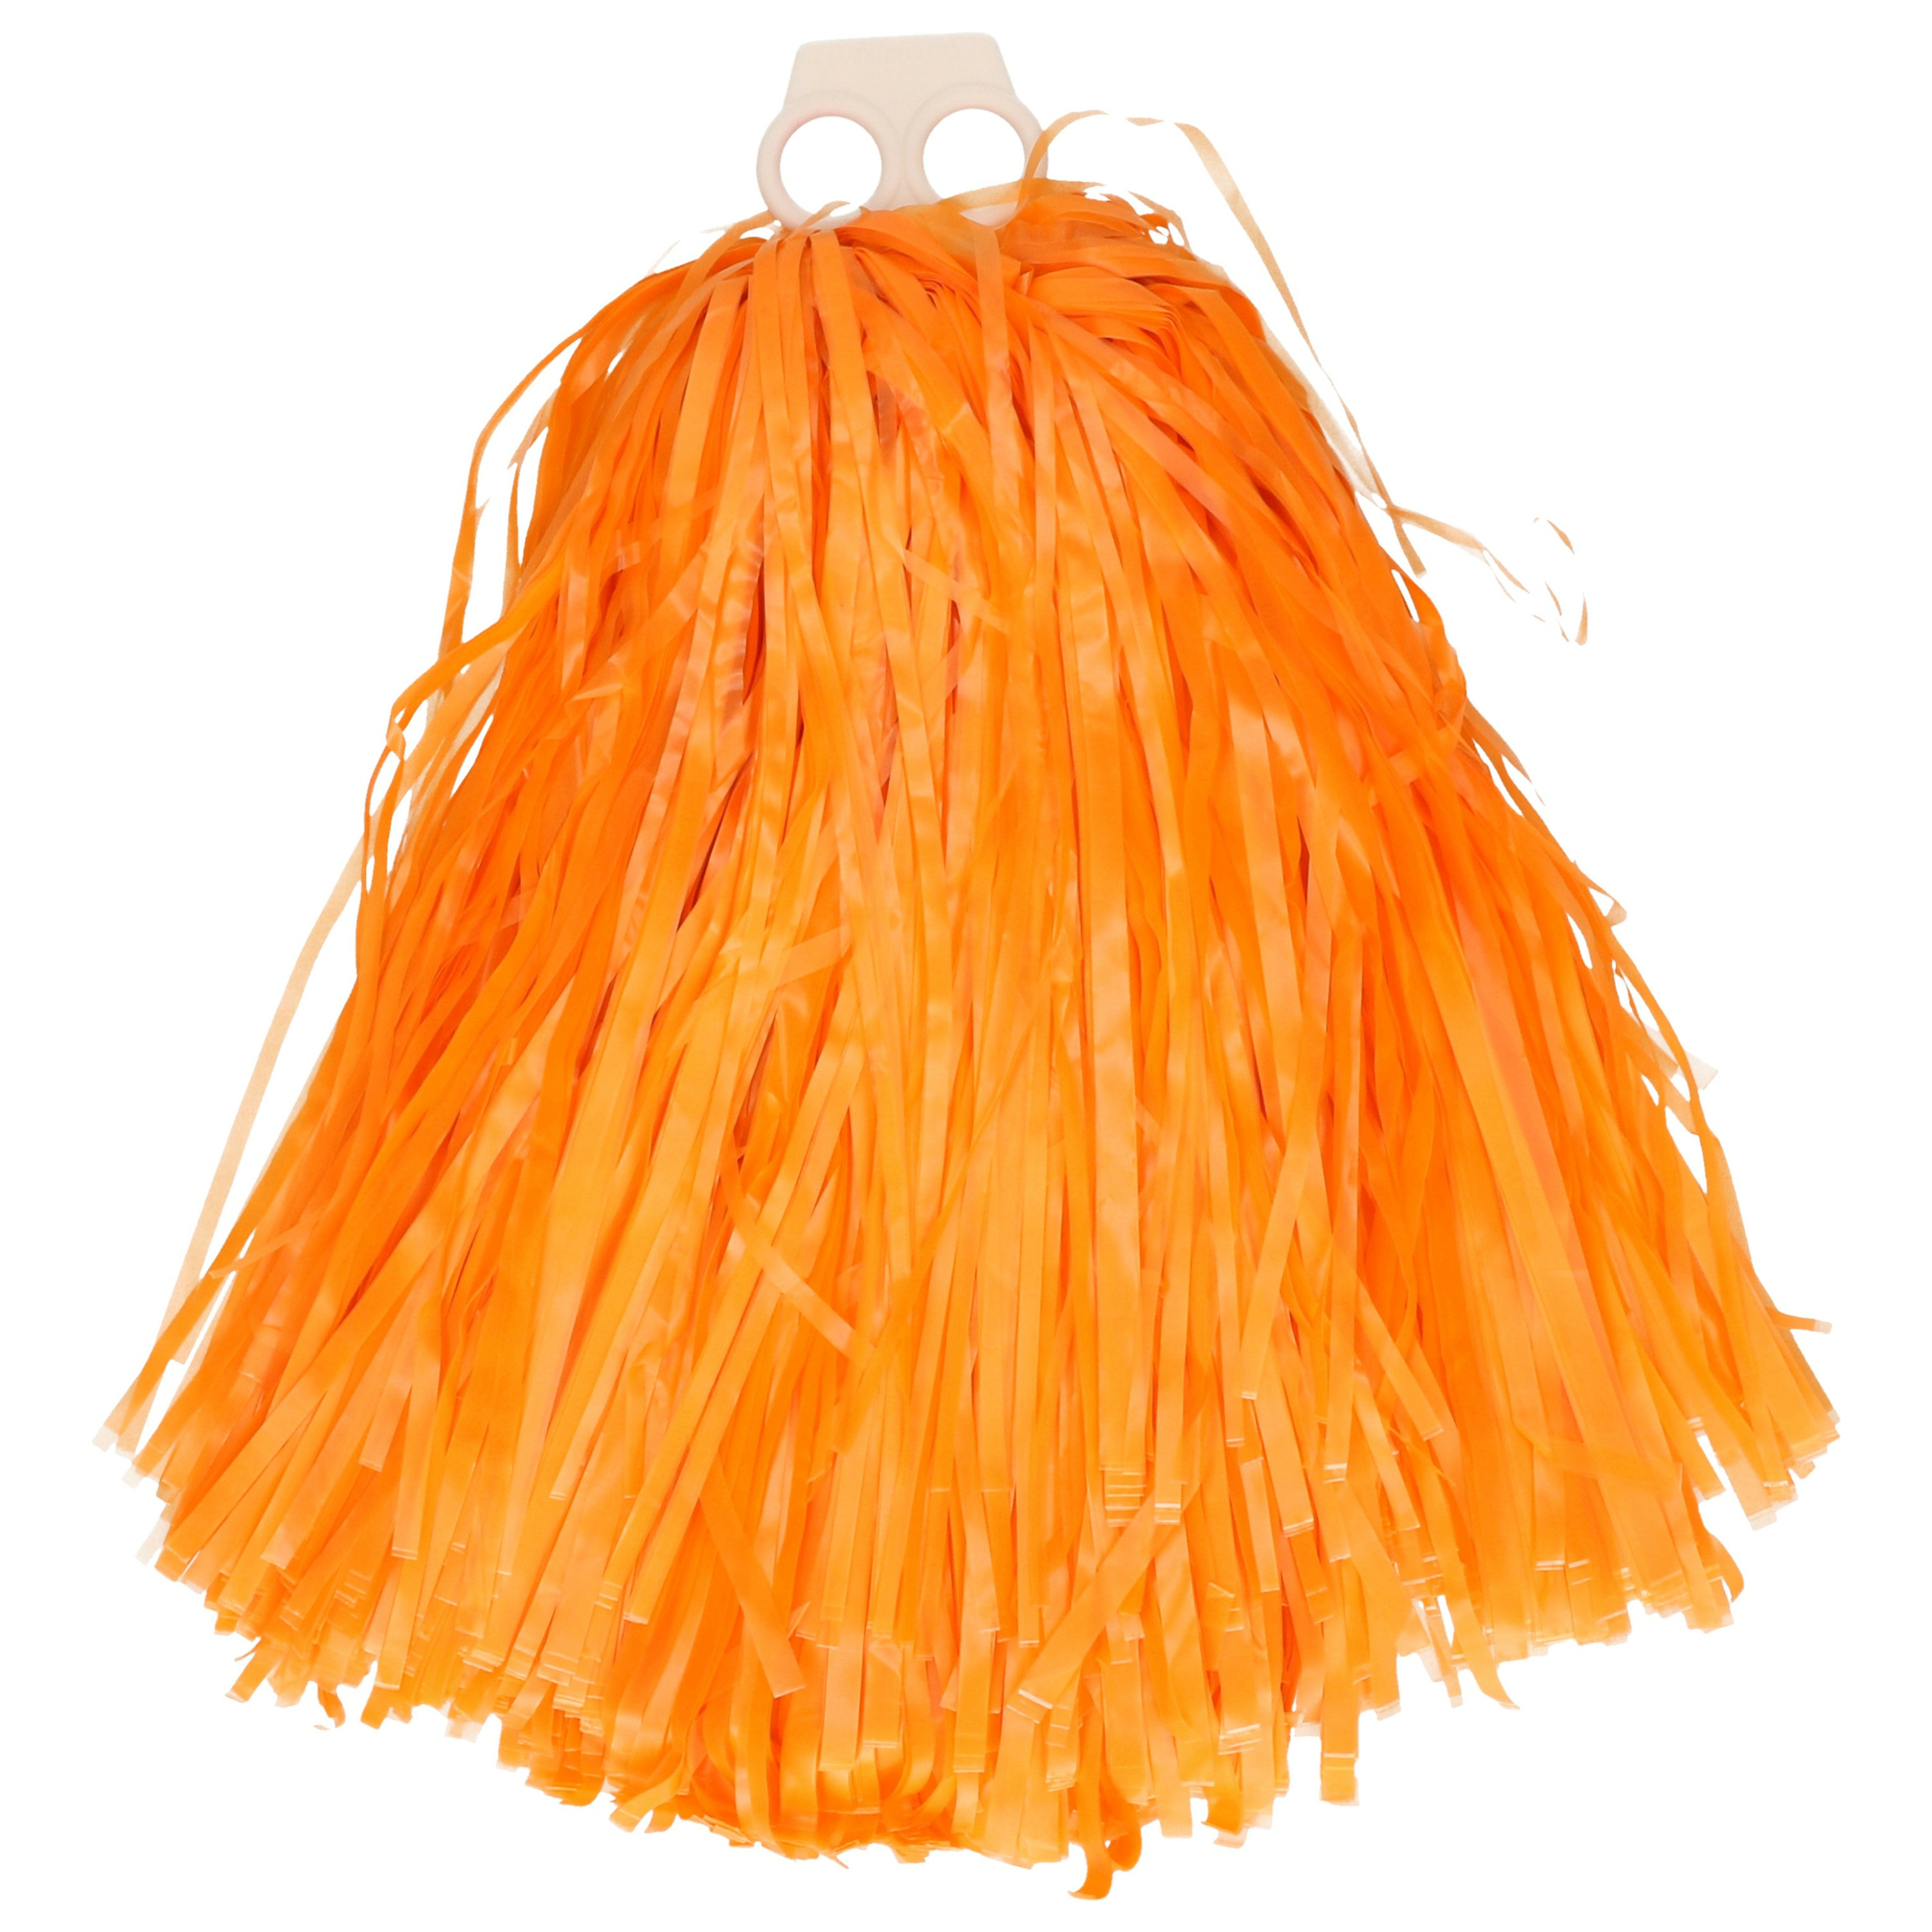 Cheerballs-pompoms 1x oranje met franjes en ring handgreep 28 cm